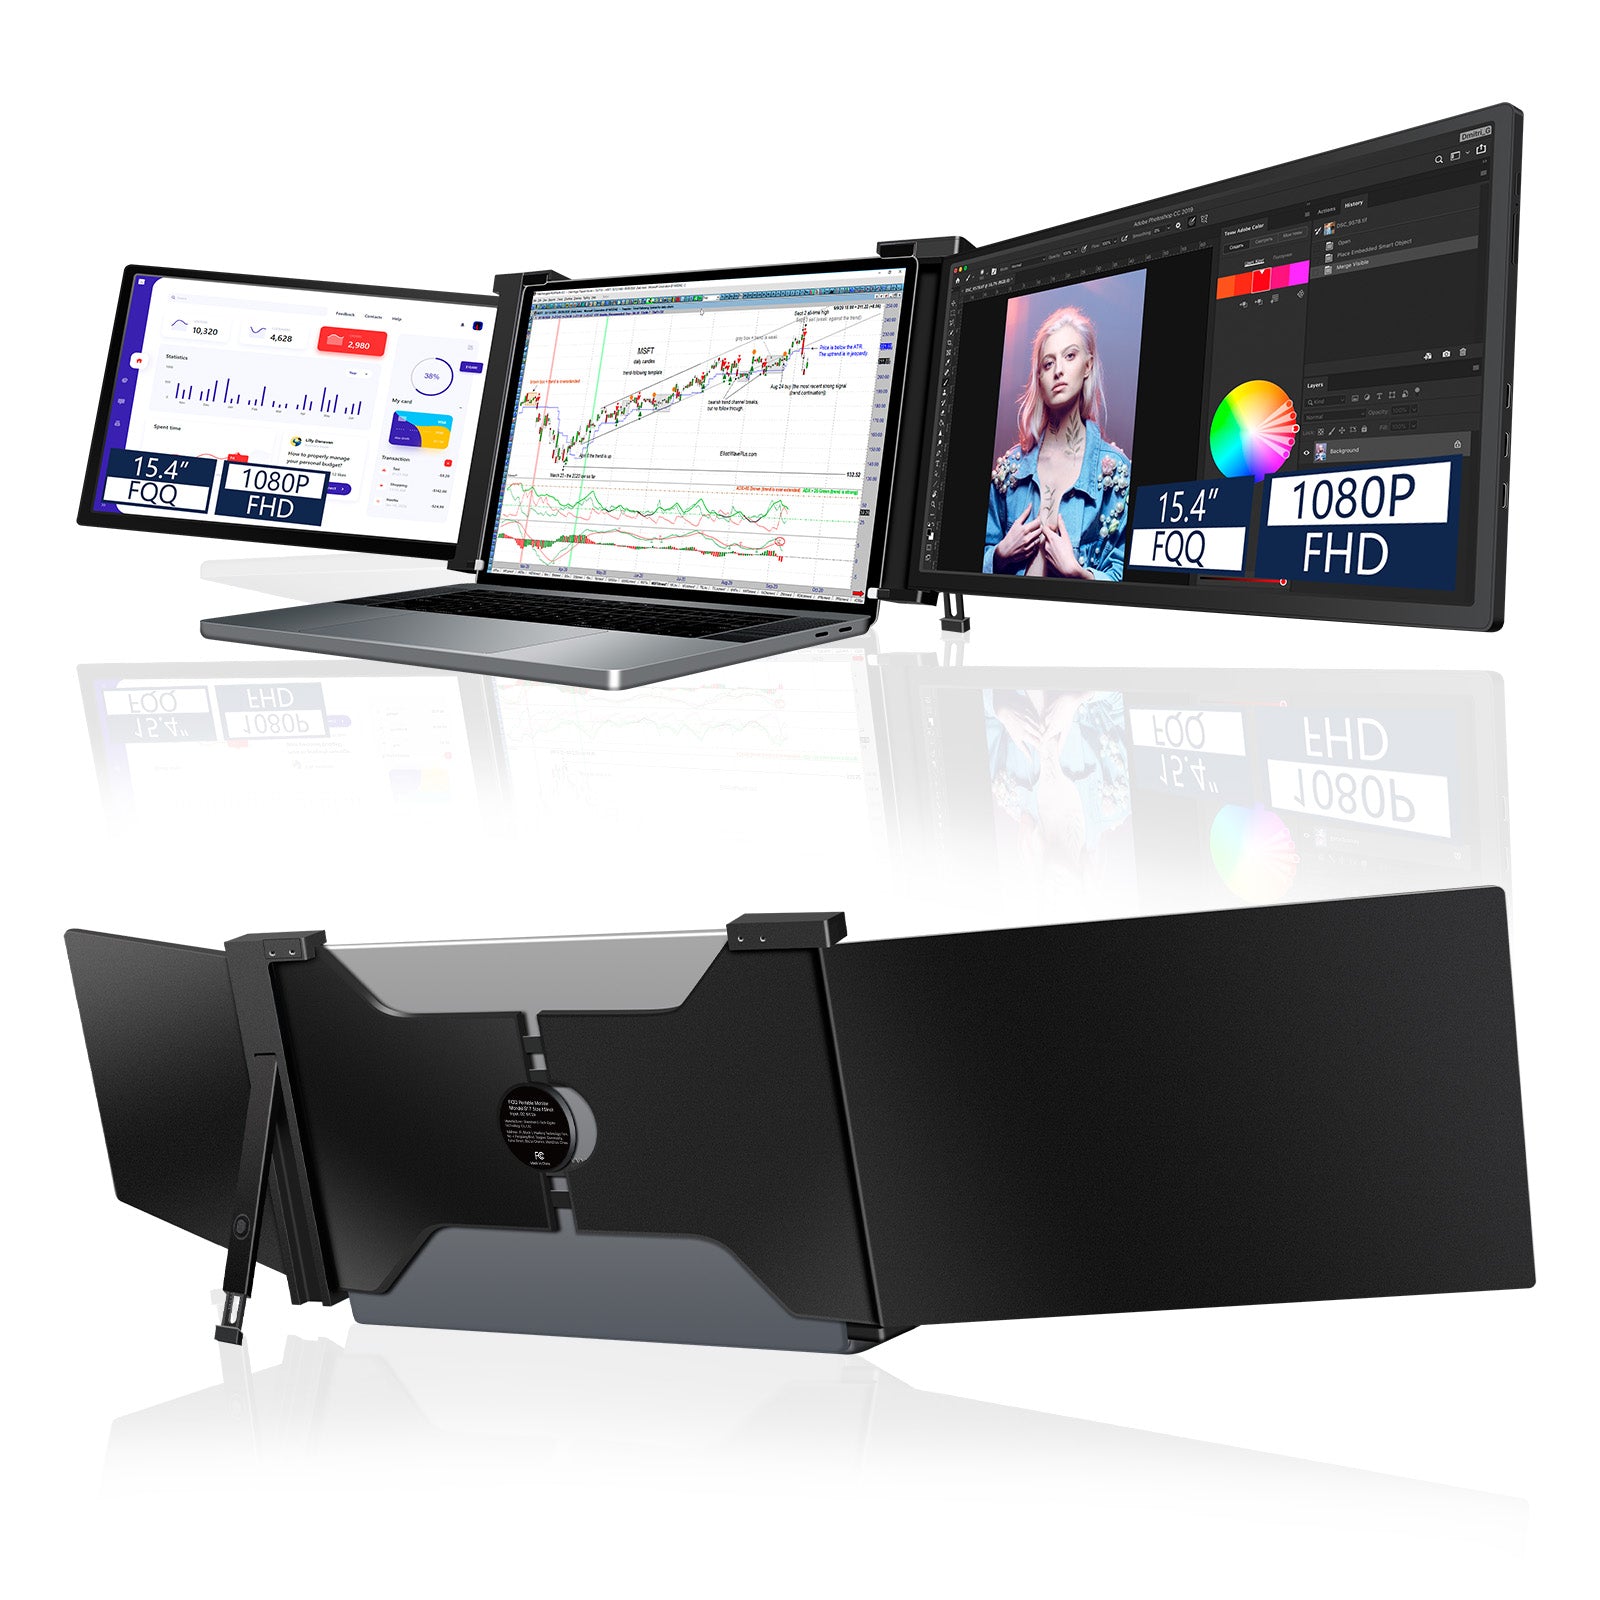 FQQ 15.4” Triple Portable Monitor - 1080P FHD IPS Laptop Screen Extender- S20